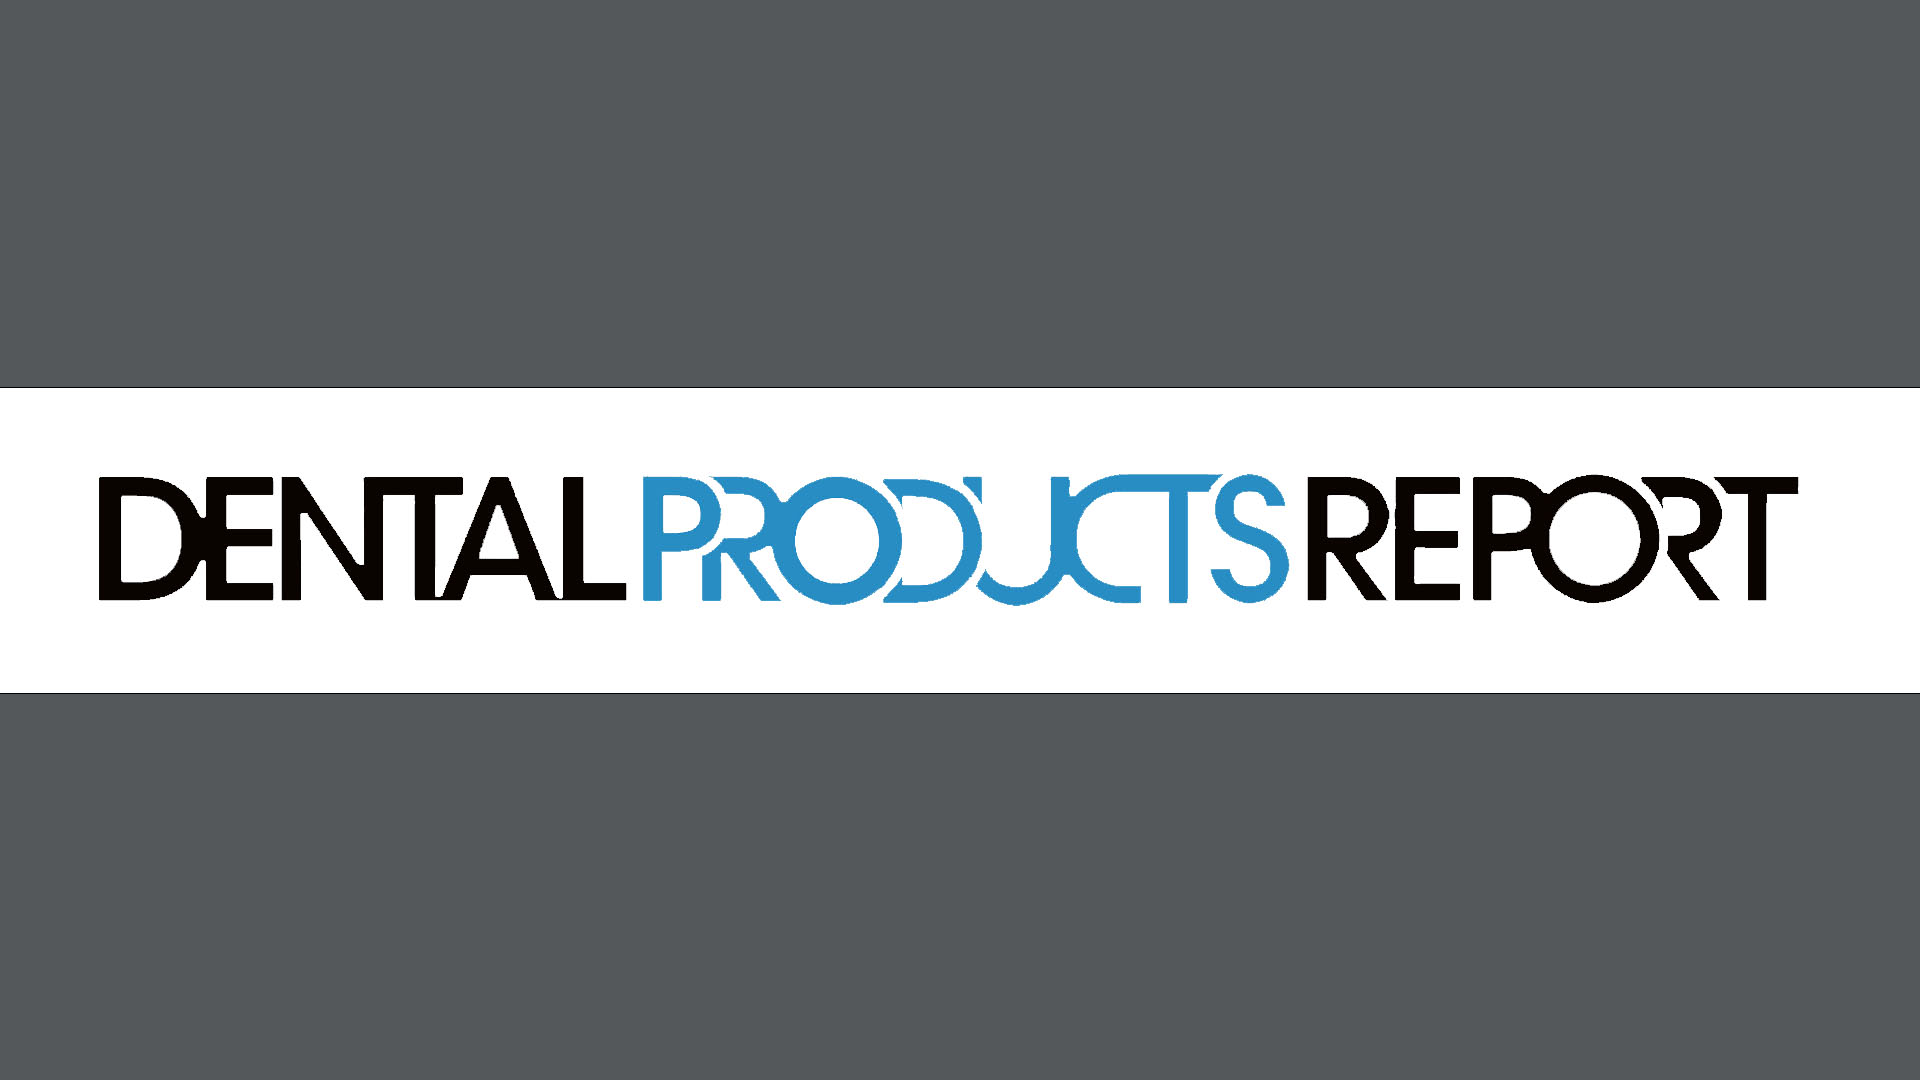 Dental Products Report | Imagen Dental Partners